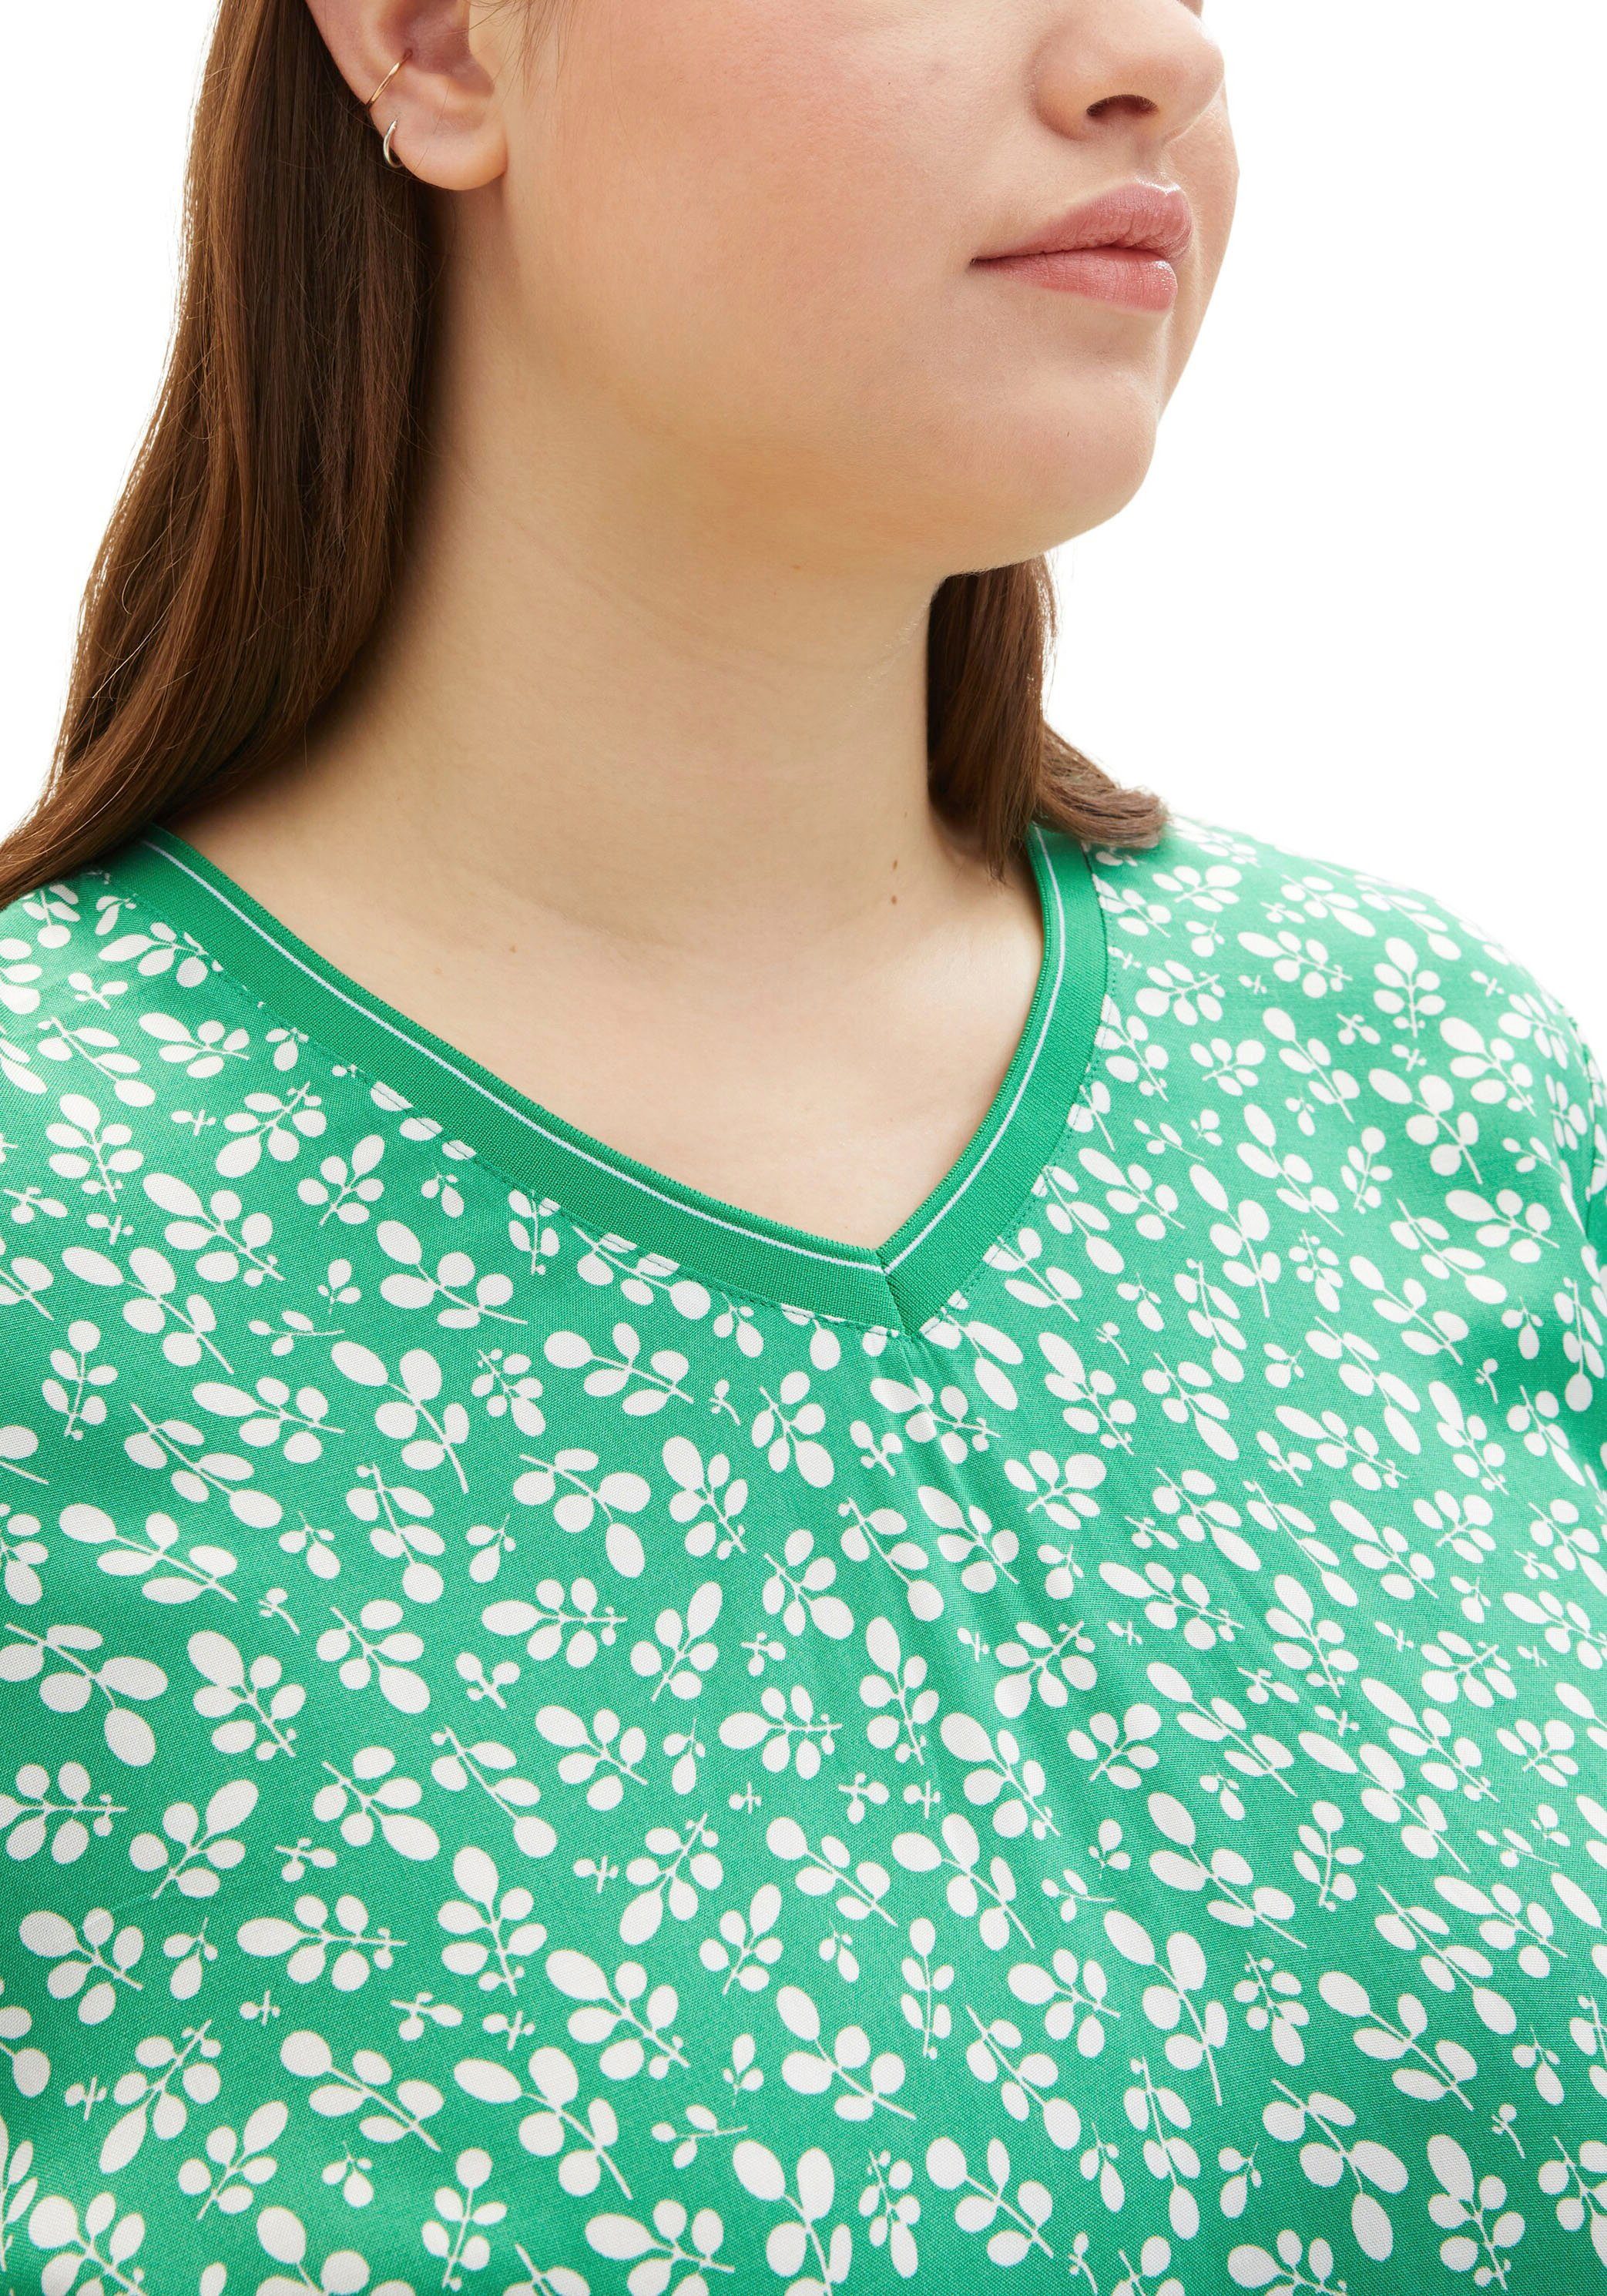 floralem mit 3/4-Arm-Shirt TOM Muster TAILOR PLUS geblümt grün weiß